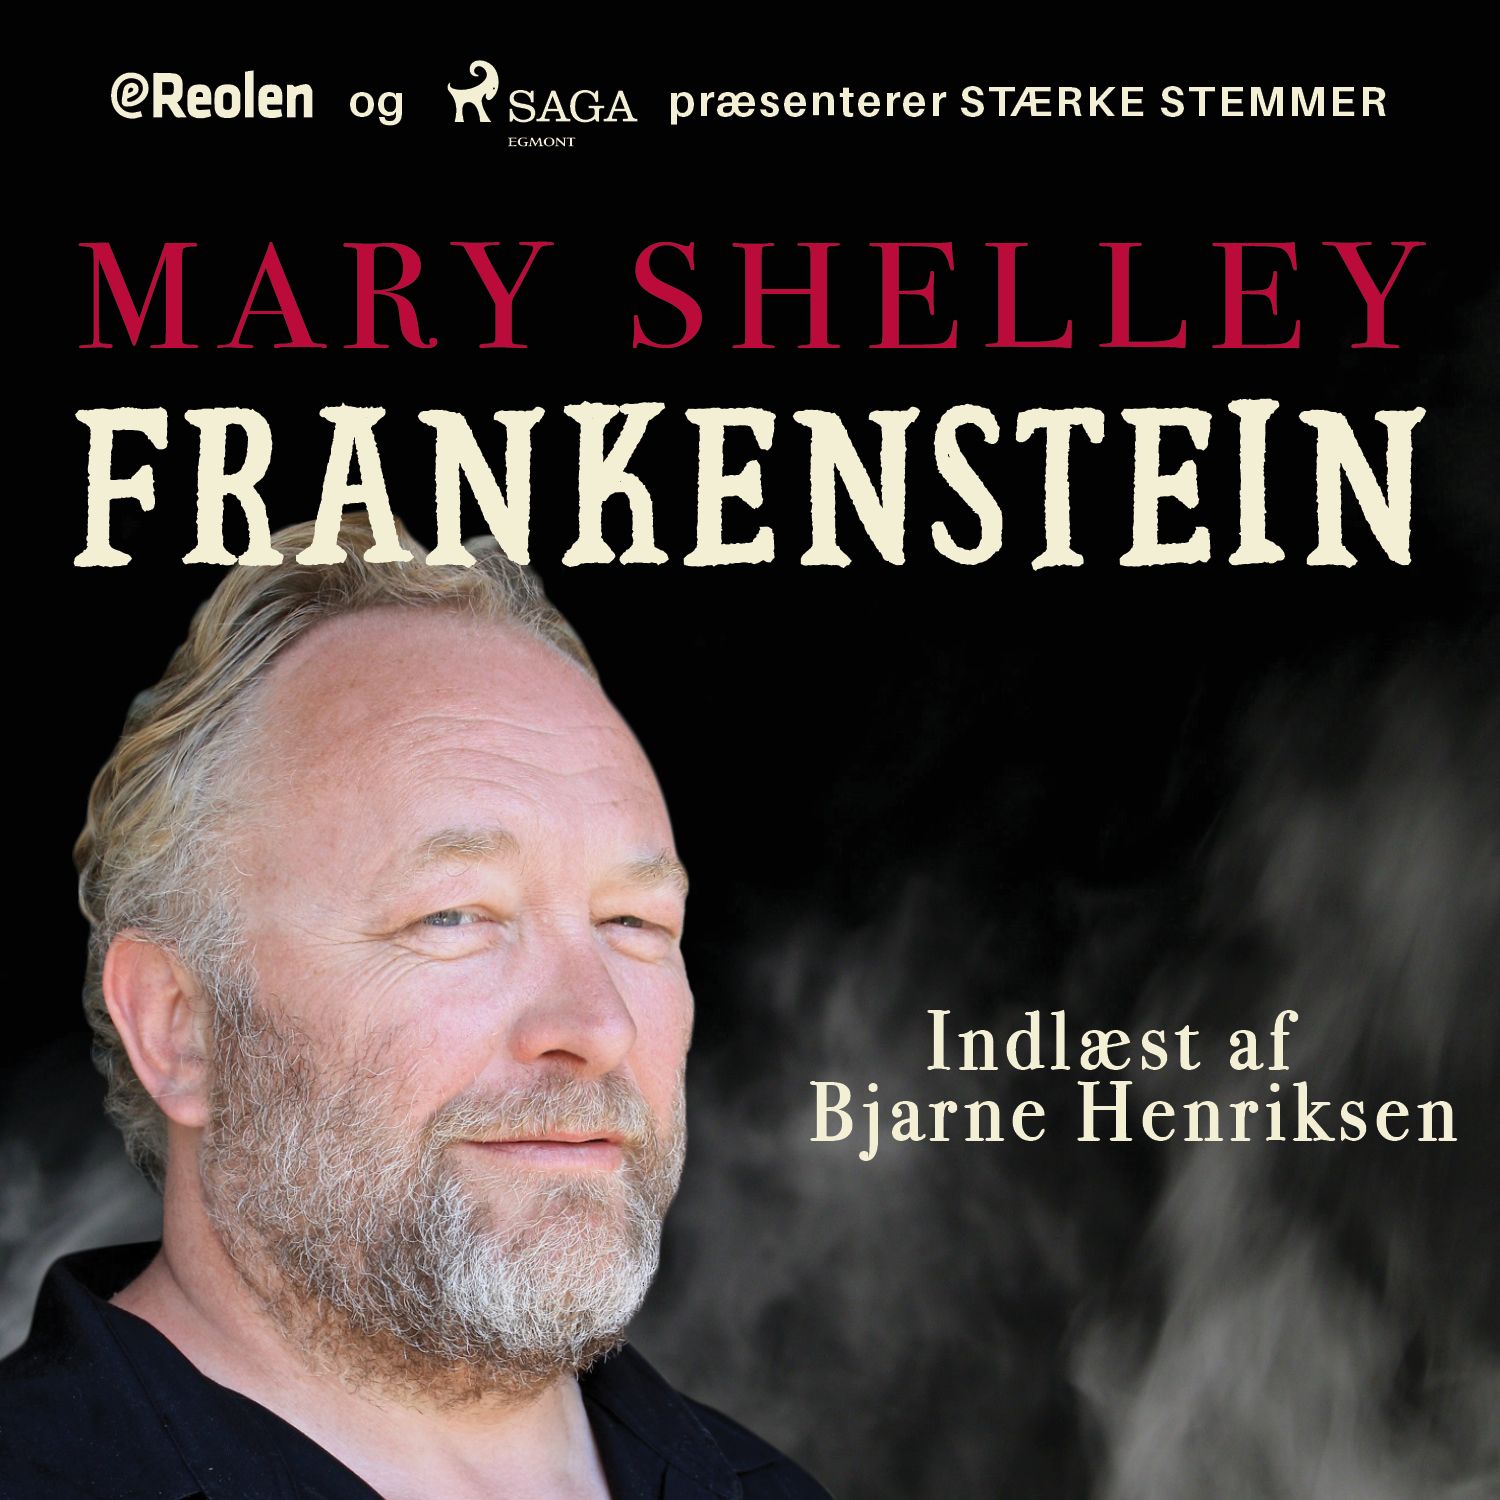 Frankenstein, ljudbok av Mary Shelley